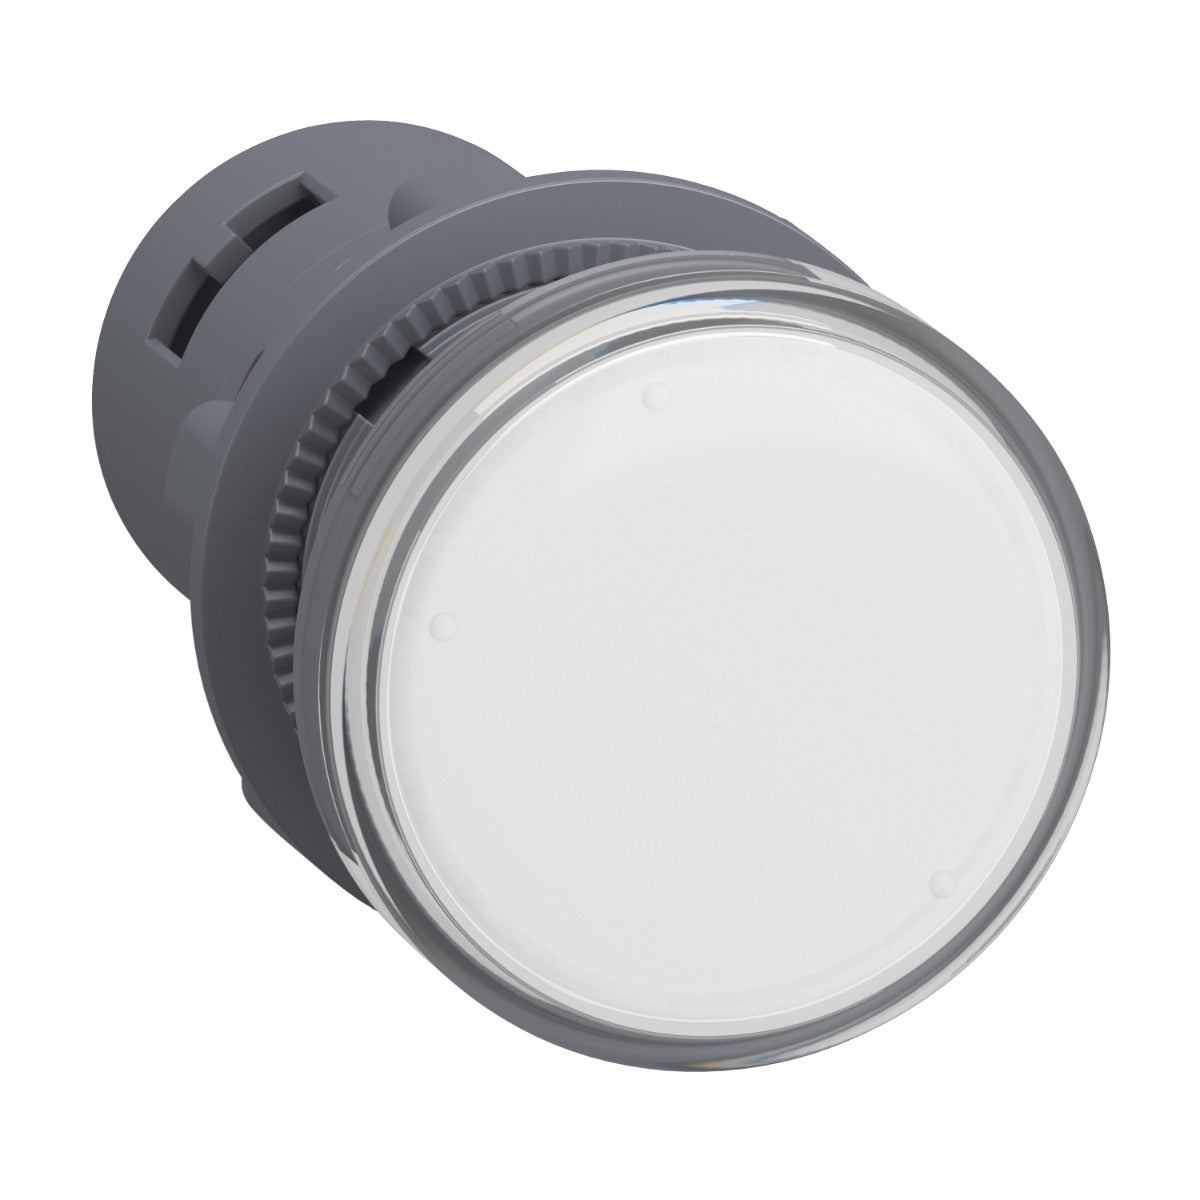 Schneider Electric Easy Harmony XA2E - Monolithic pilot light Ã˜ 22 - white - integral LED - 380 V AC - screw clamp terminals